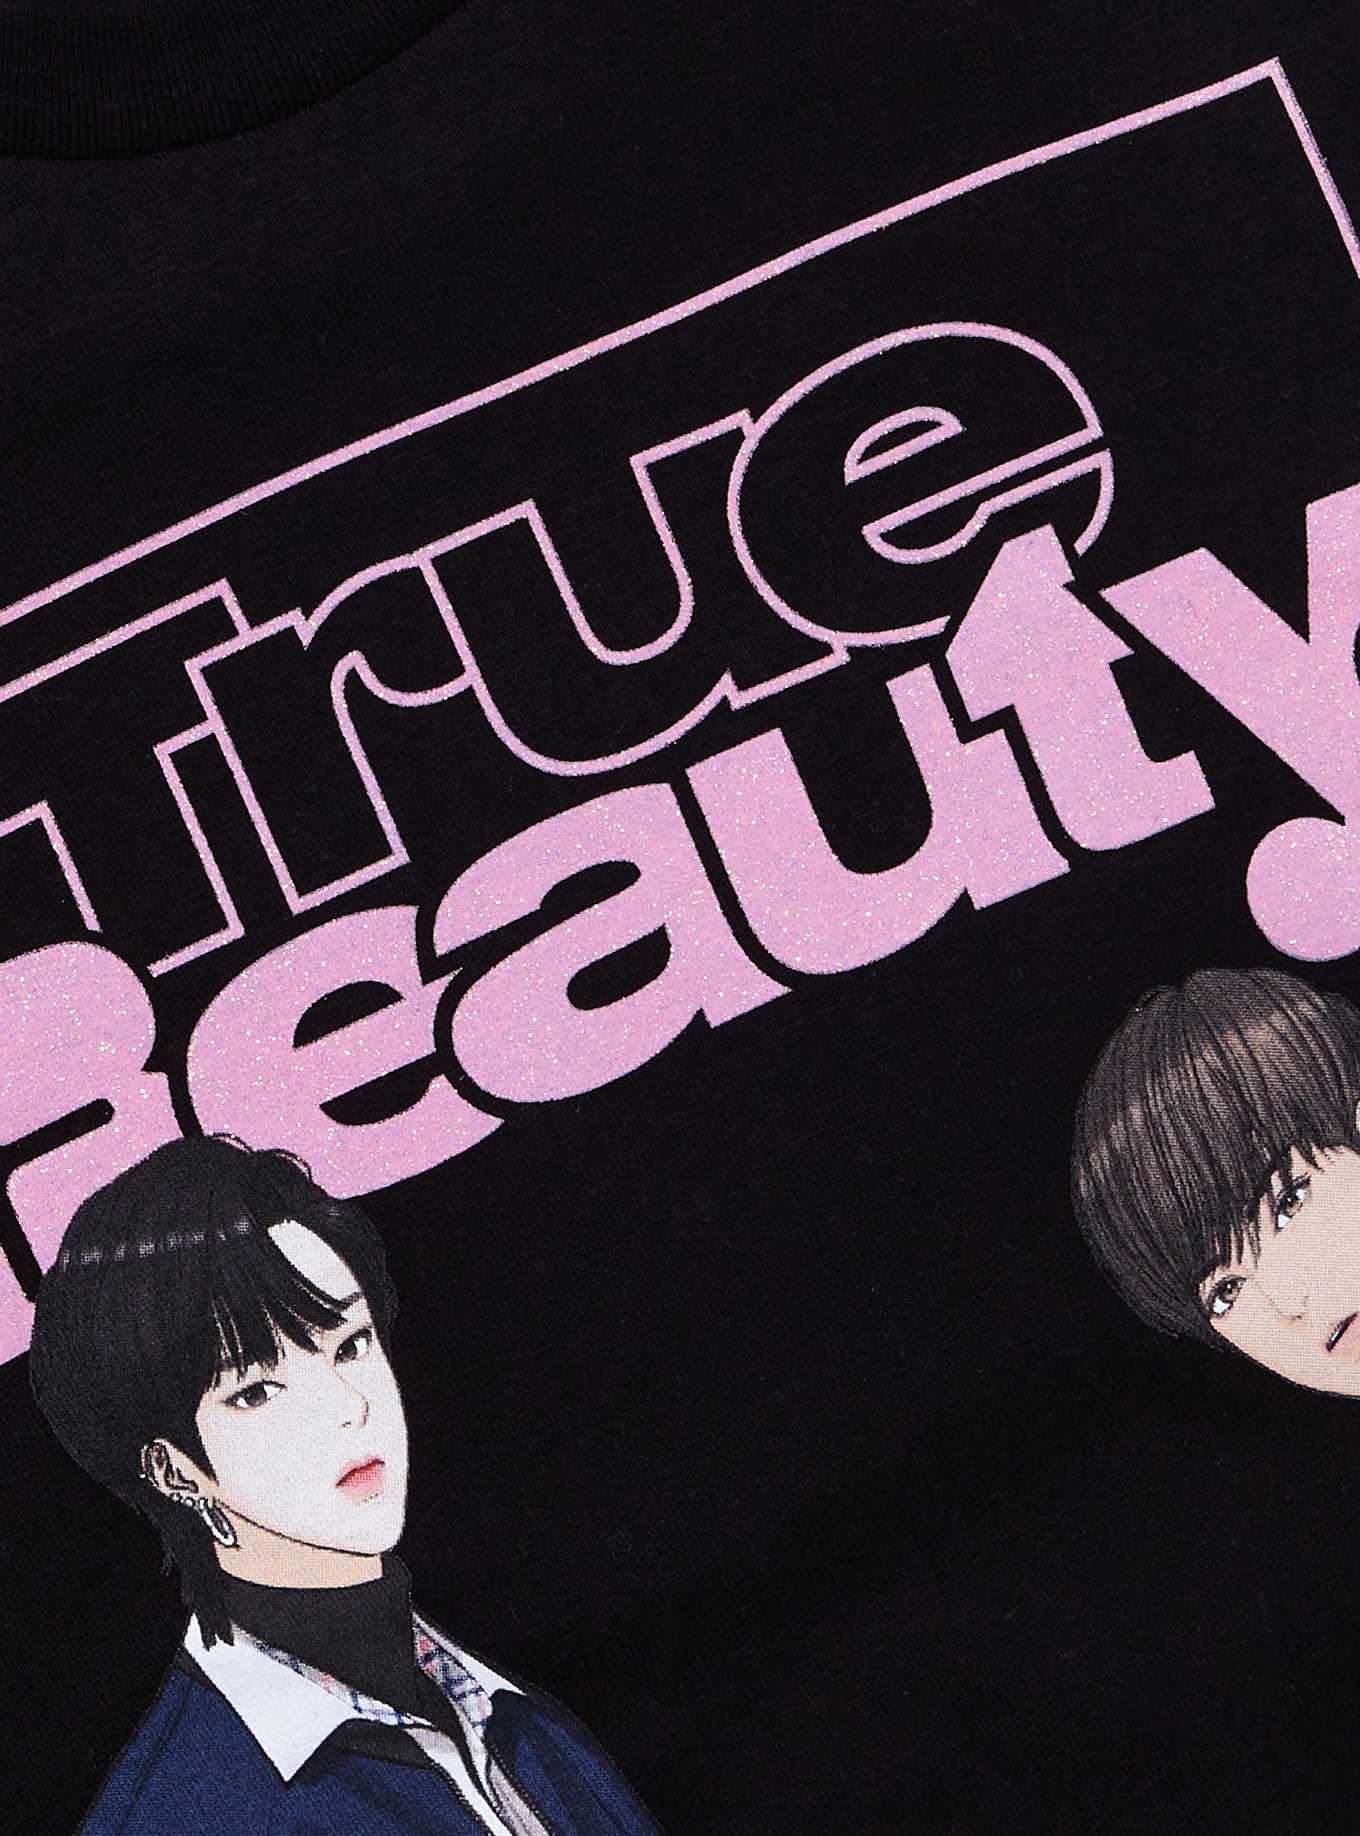 True Beauty Trio Glitter Boyfriend Fit Girls T-Shirt, , hi-res